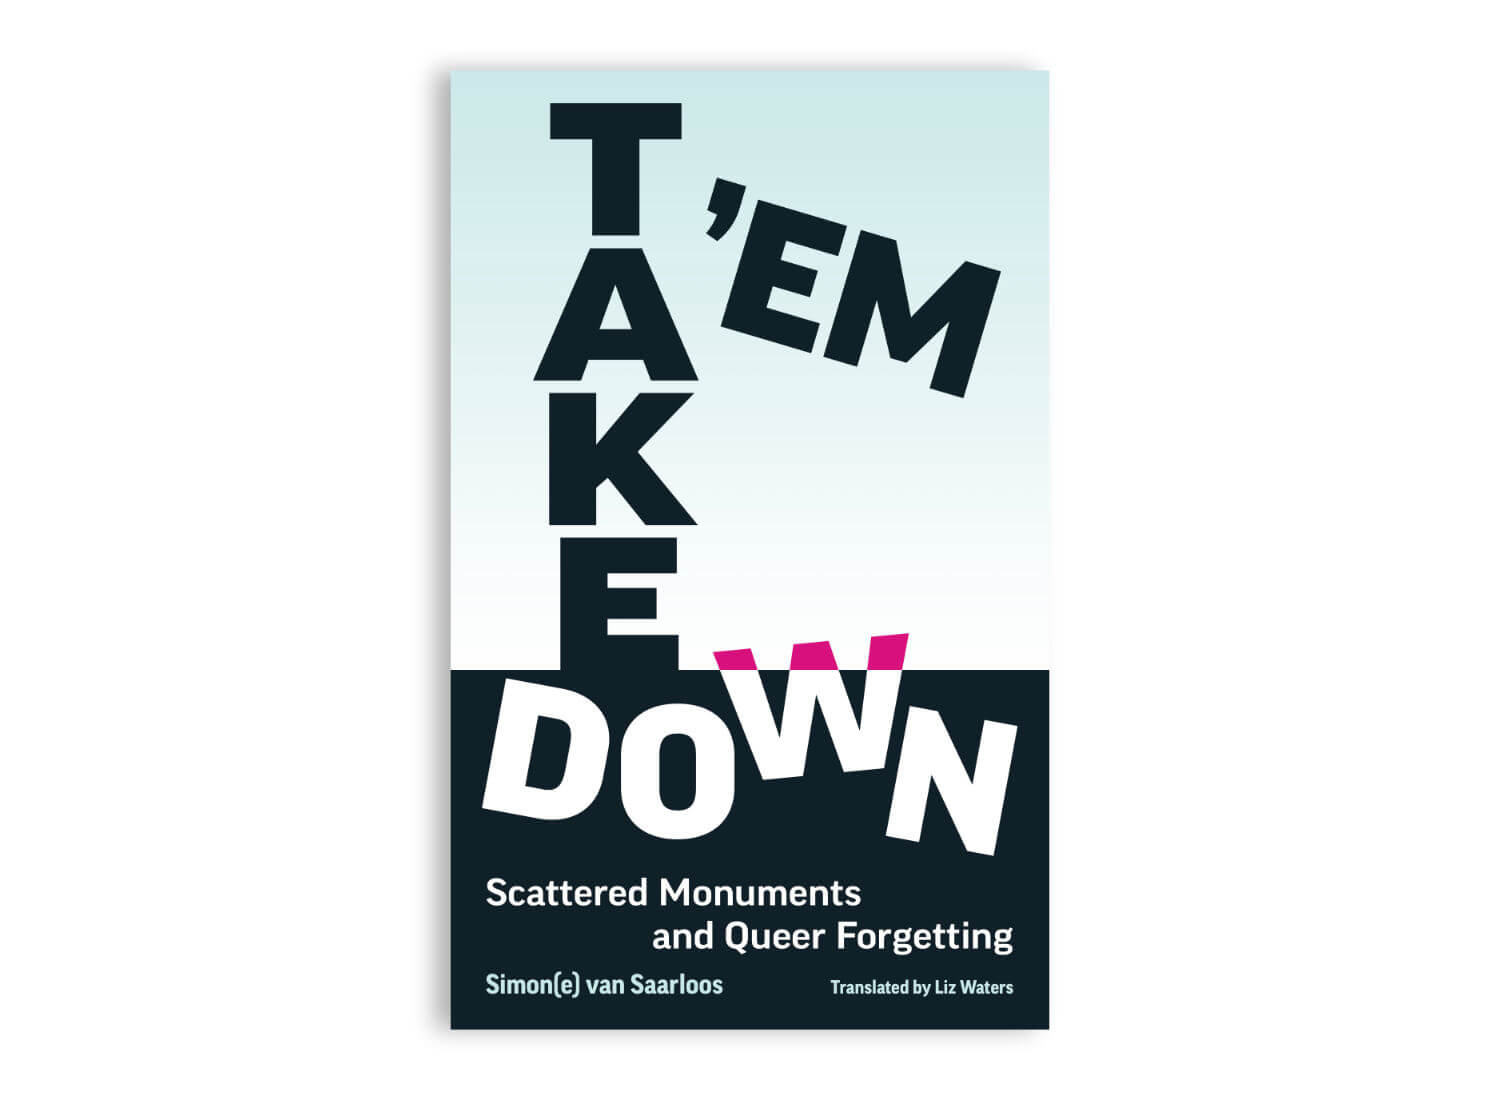 [Launch] TAKE ‘EM DOWN by Simon(e) van Saarloos